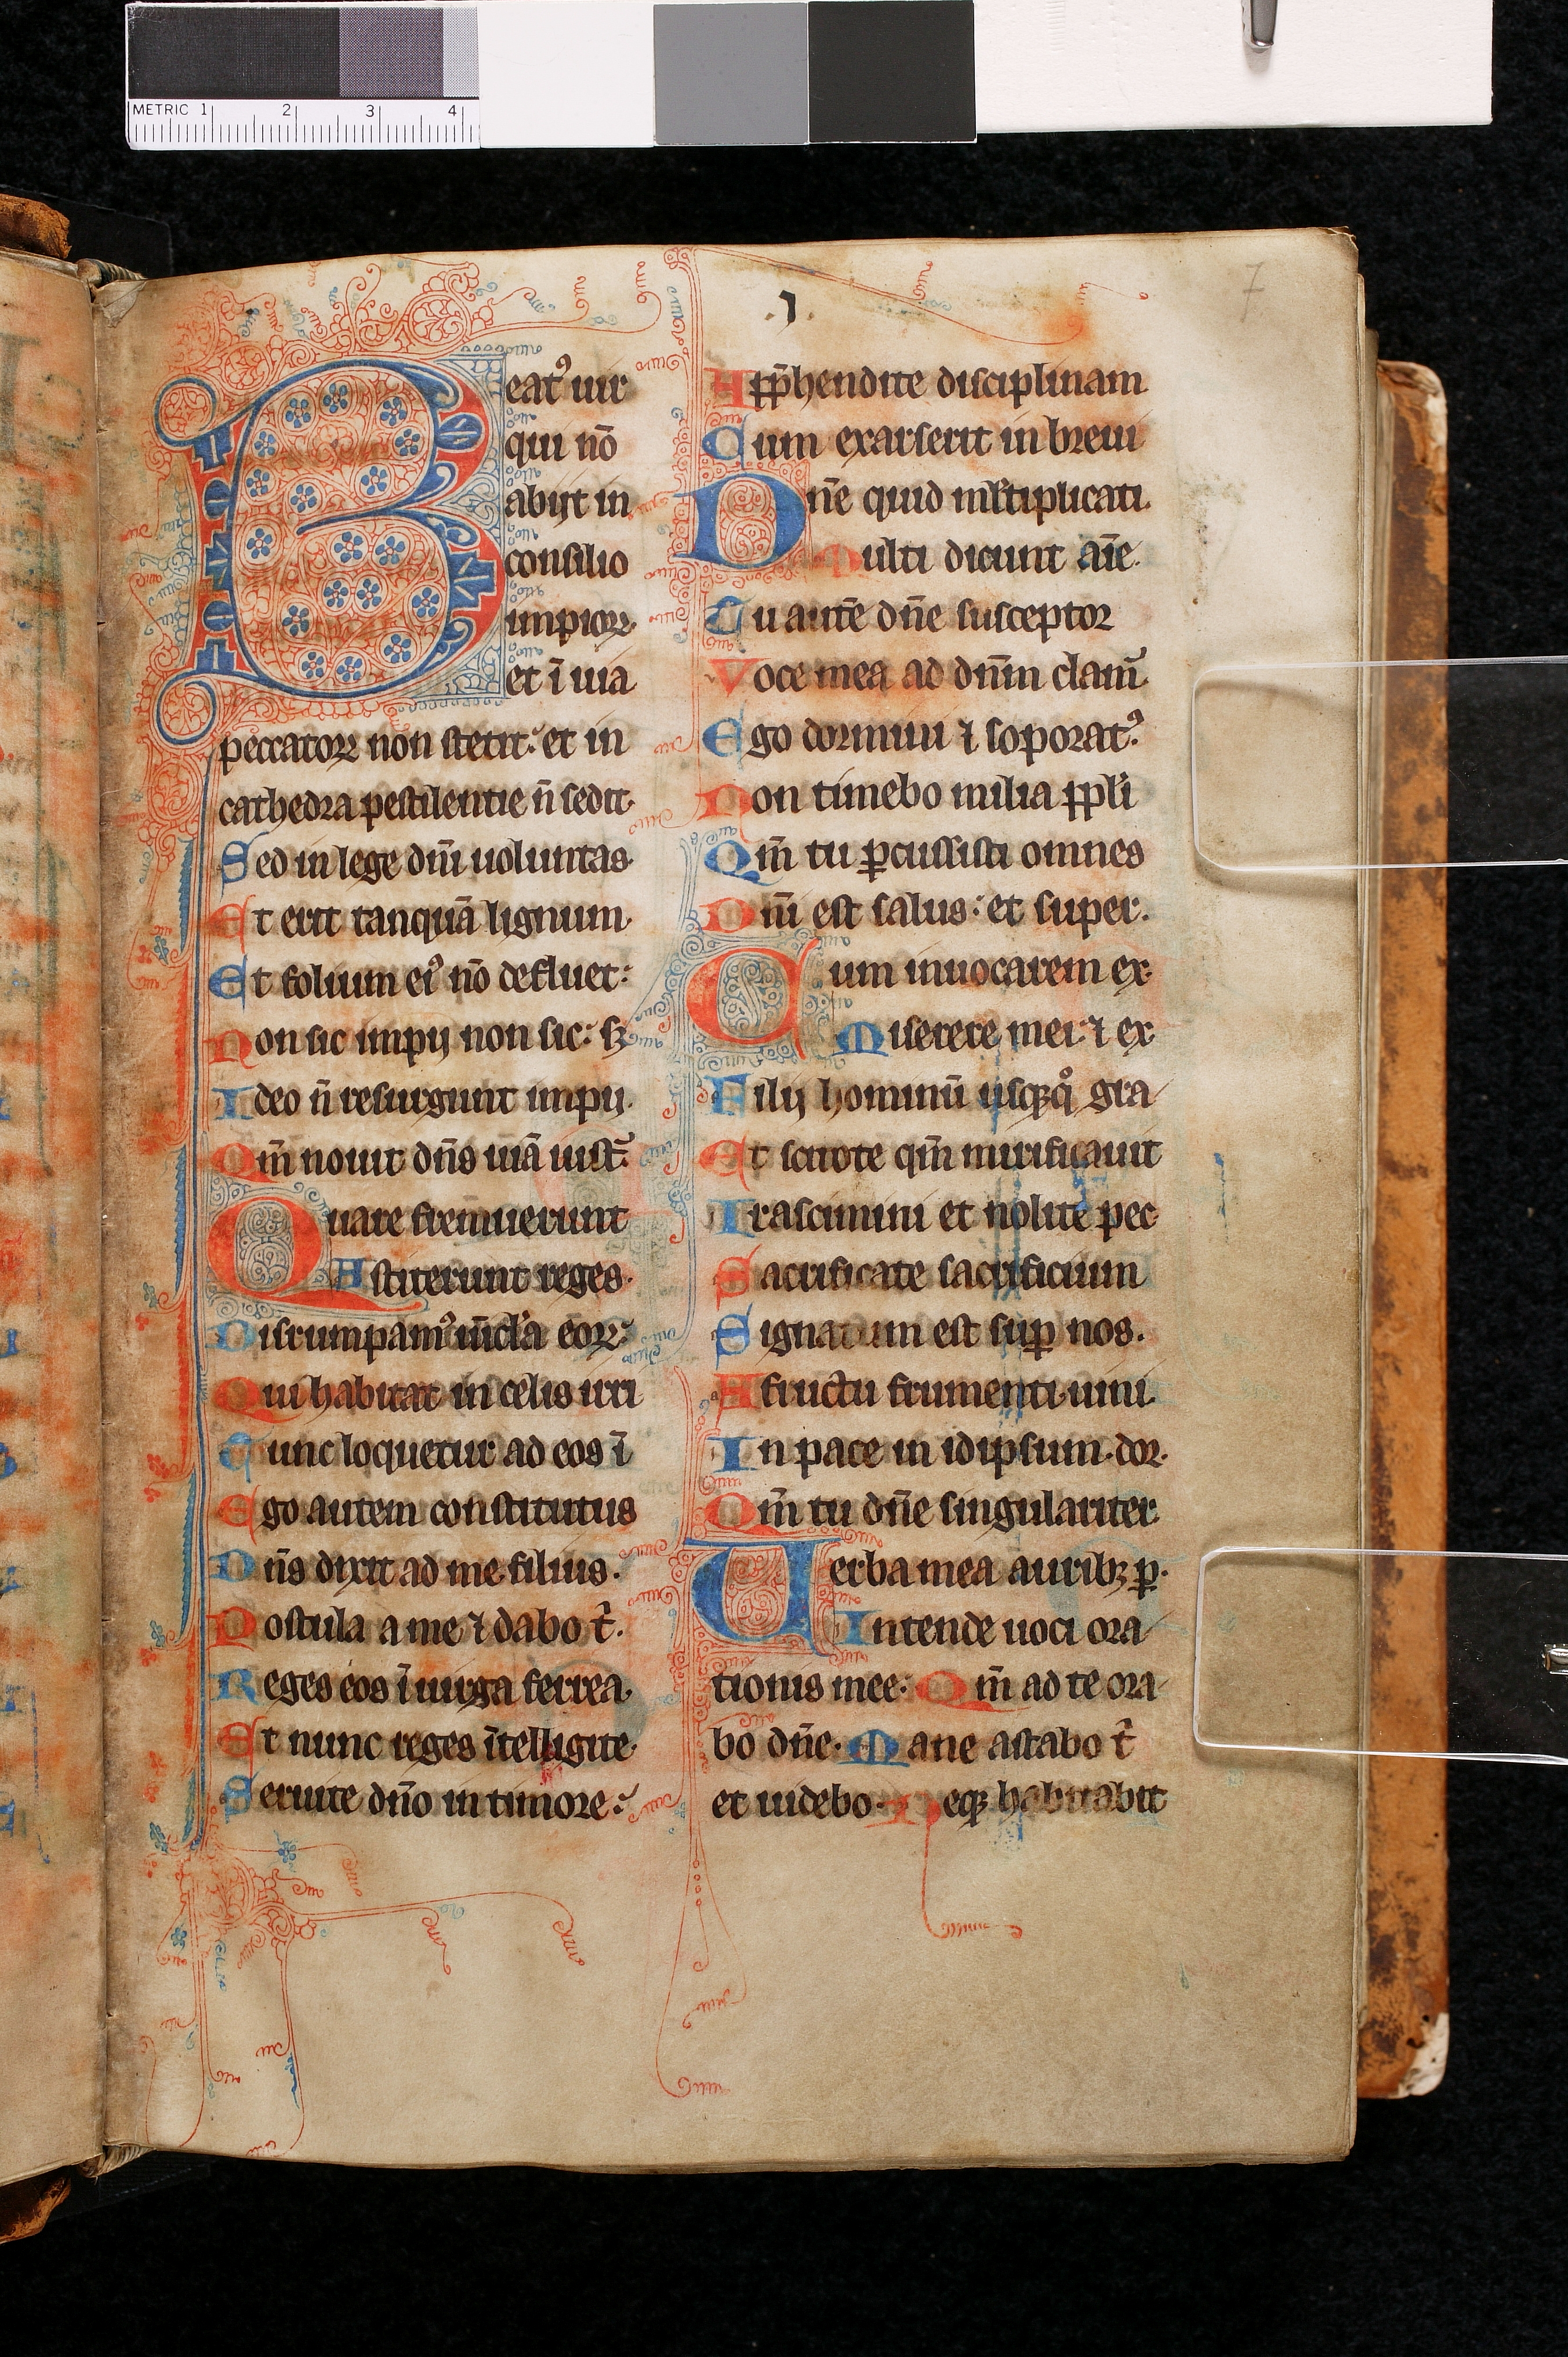 Gothic Textualis, 13th-14th century